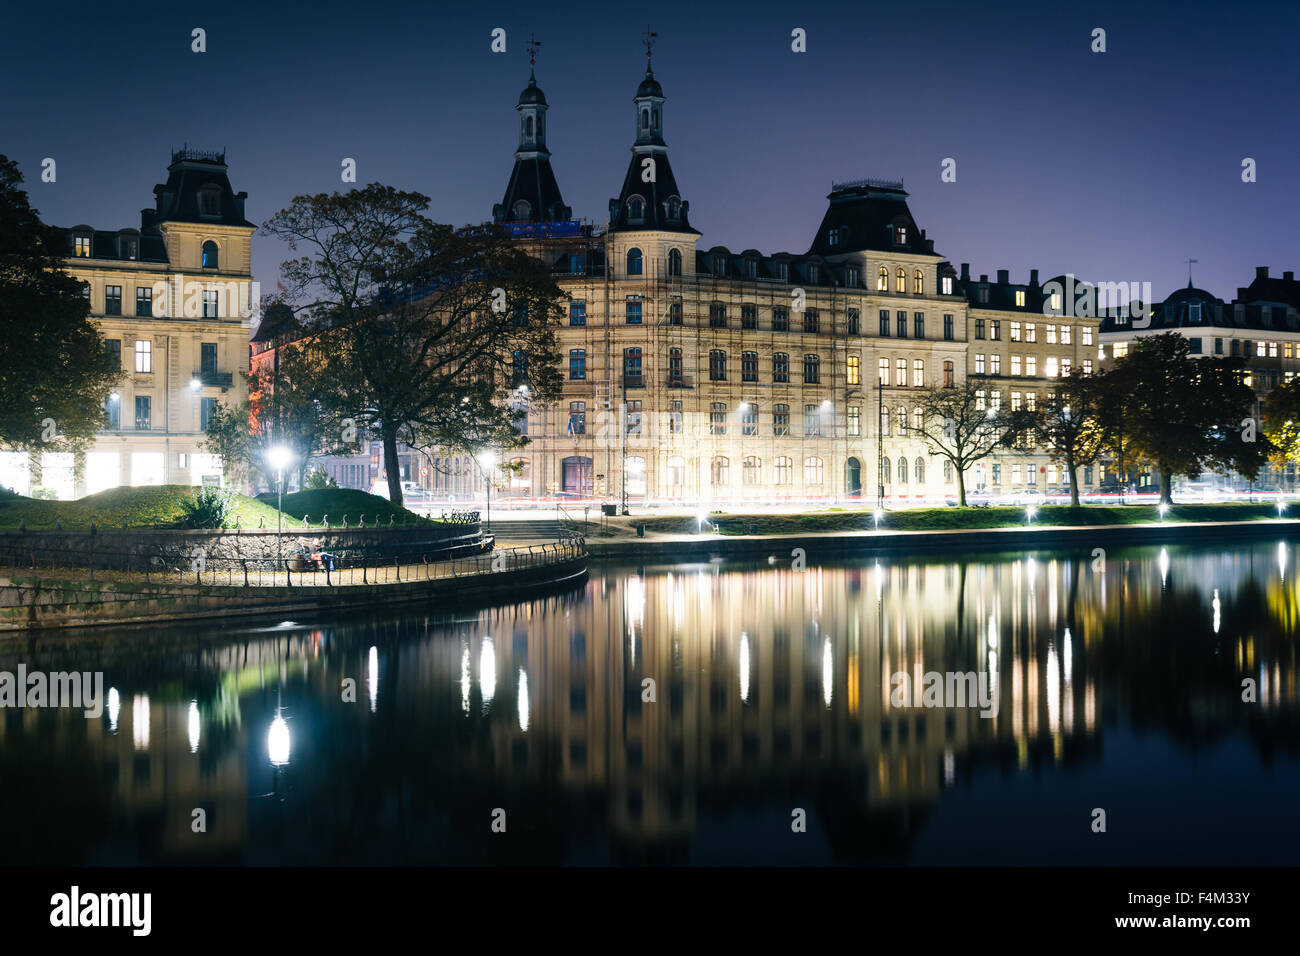 Gebäude entlang Peblinge Sø in der Nacht, in Kopenhagen, Dänemark. Stockfoto